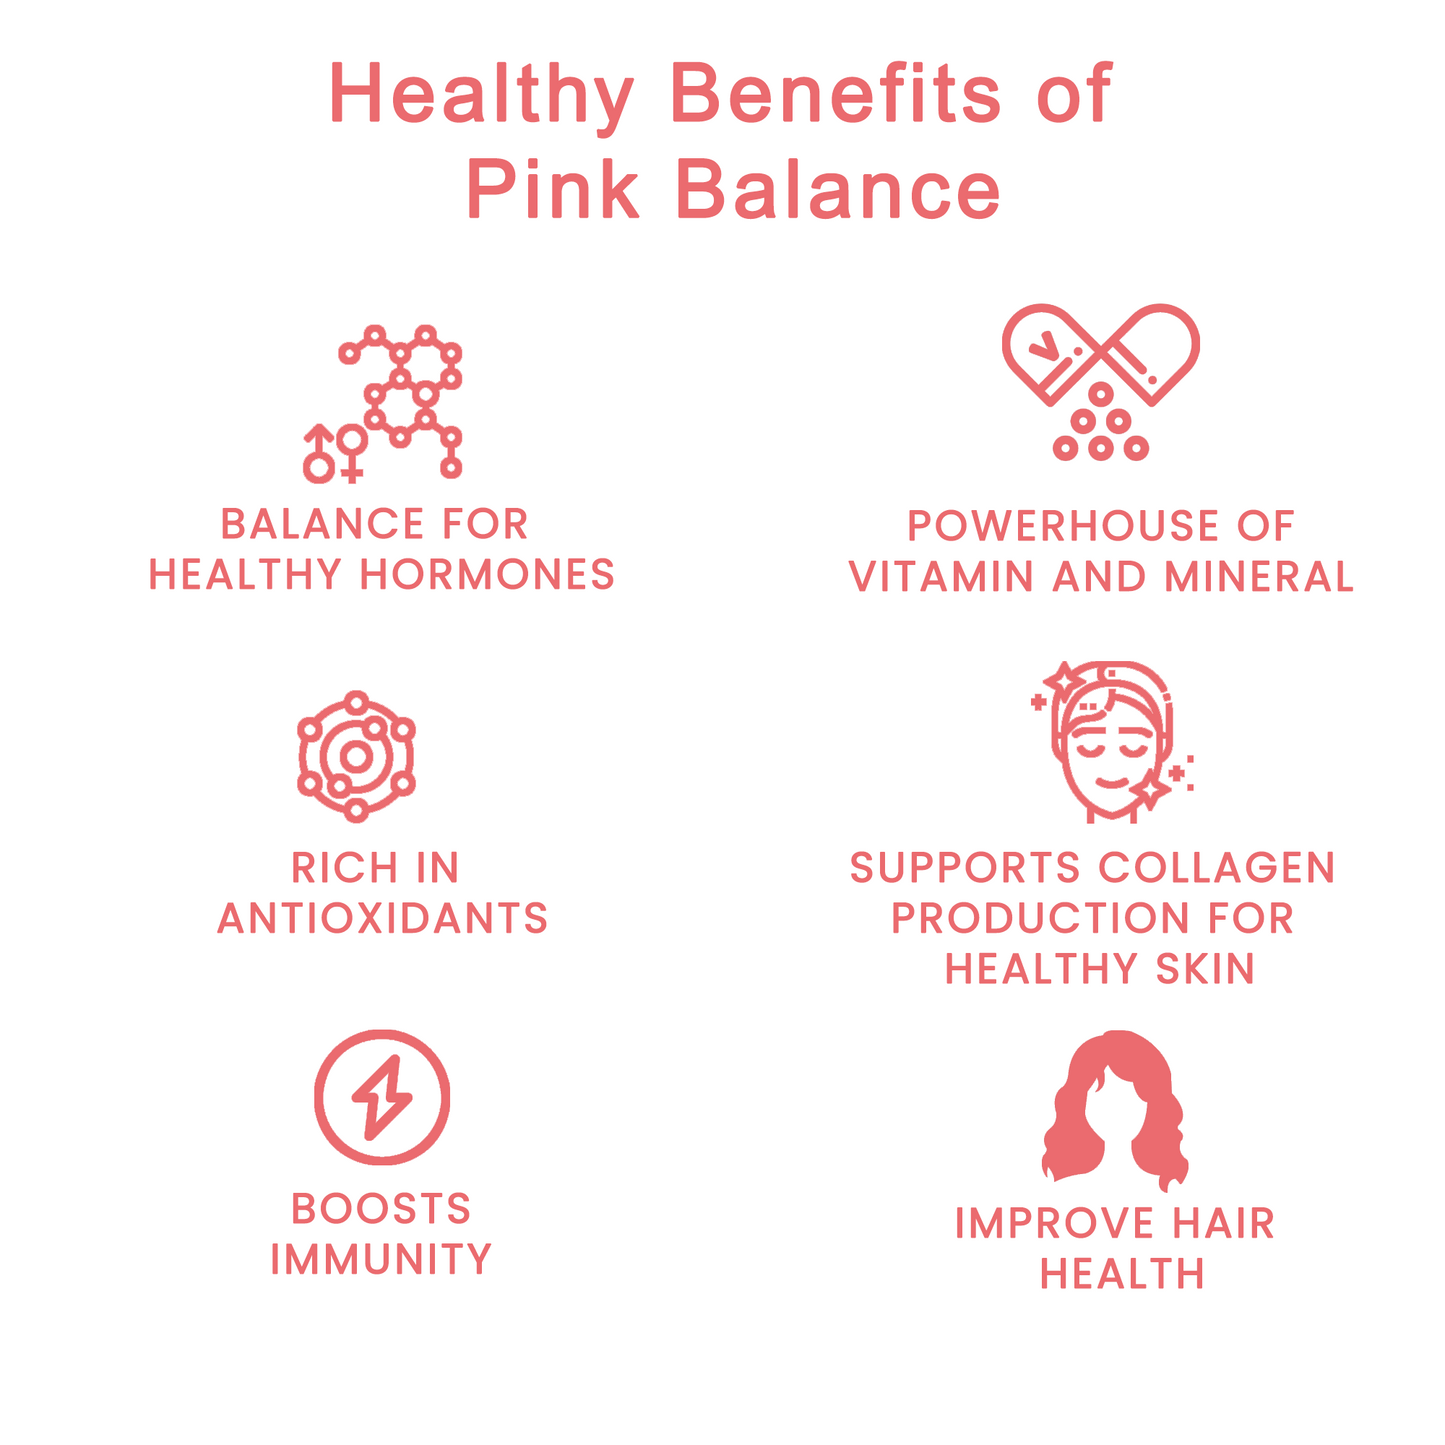 Pink Balance Superfood | Hormonal Balance Blend With Powerful Superfood.